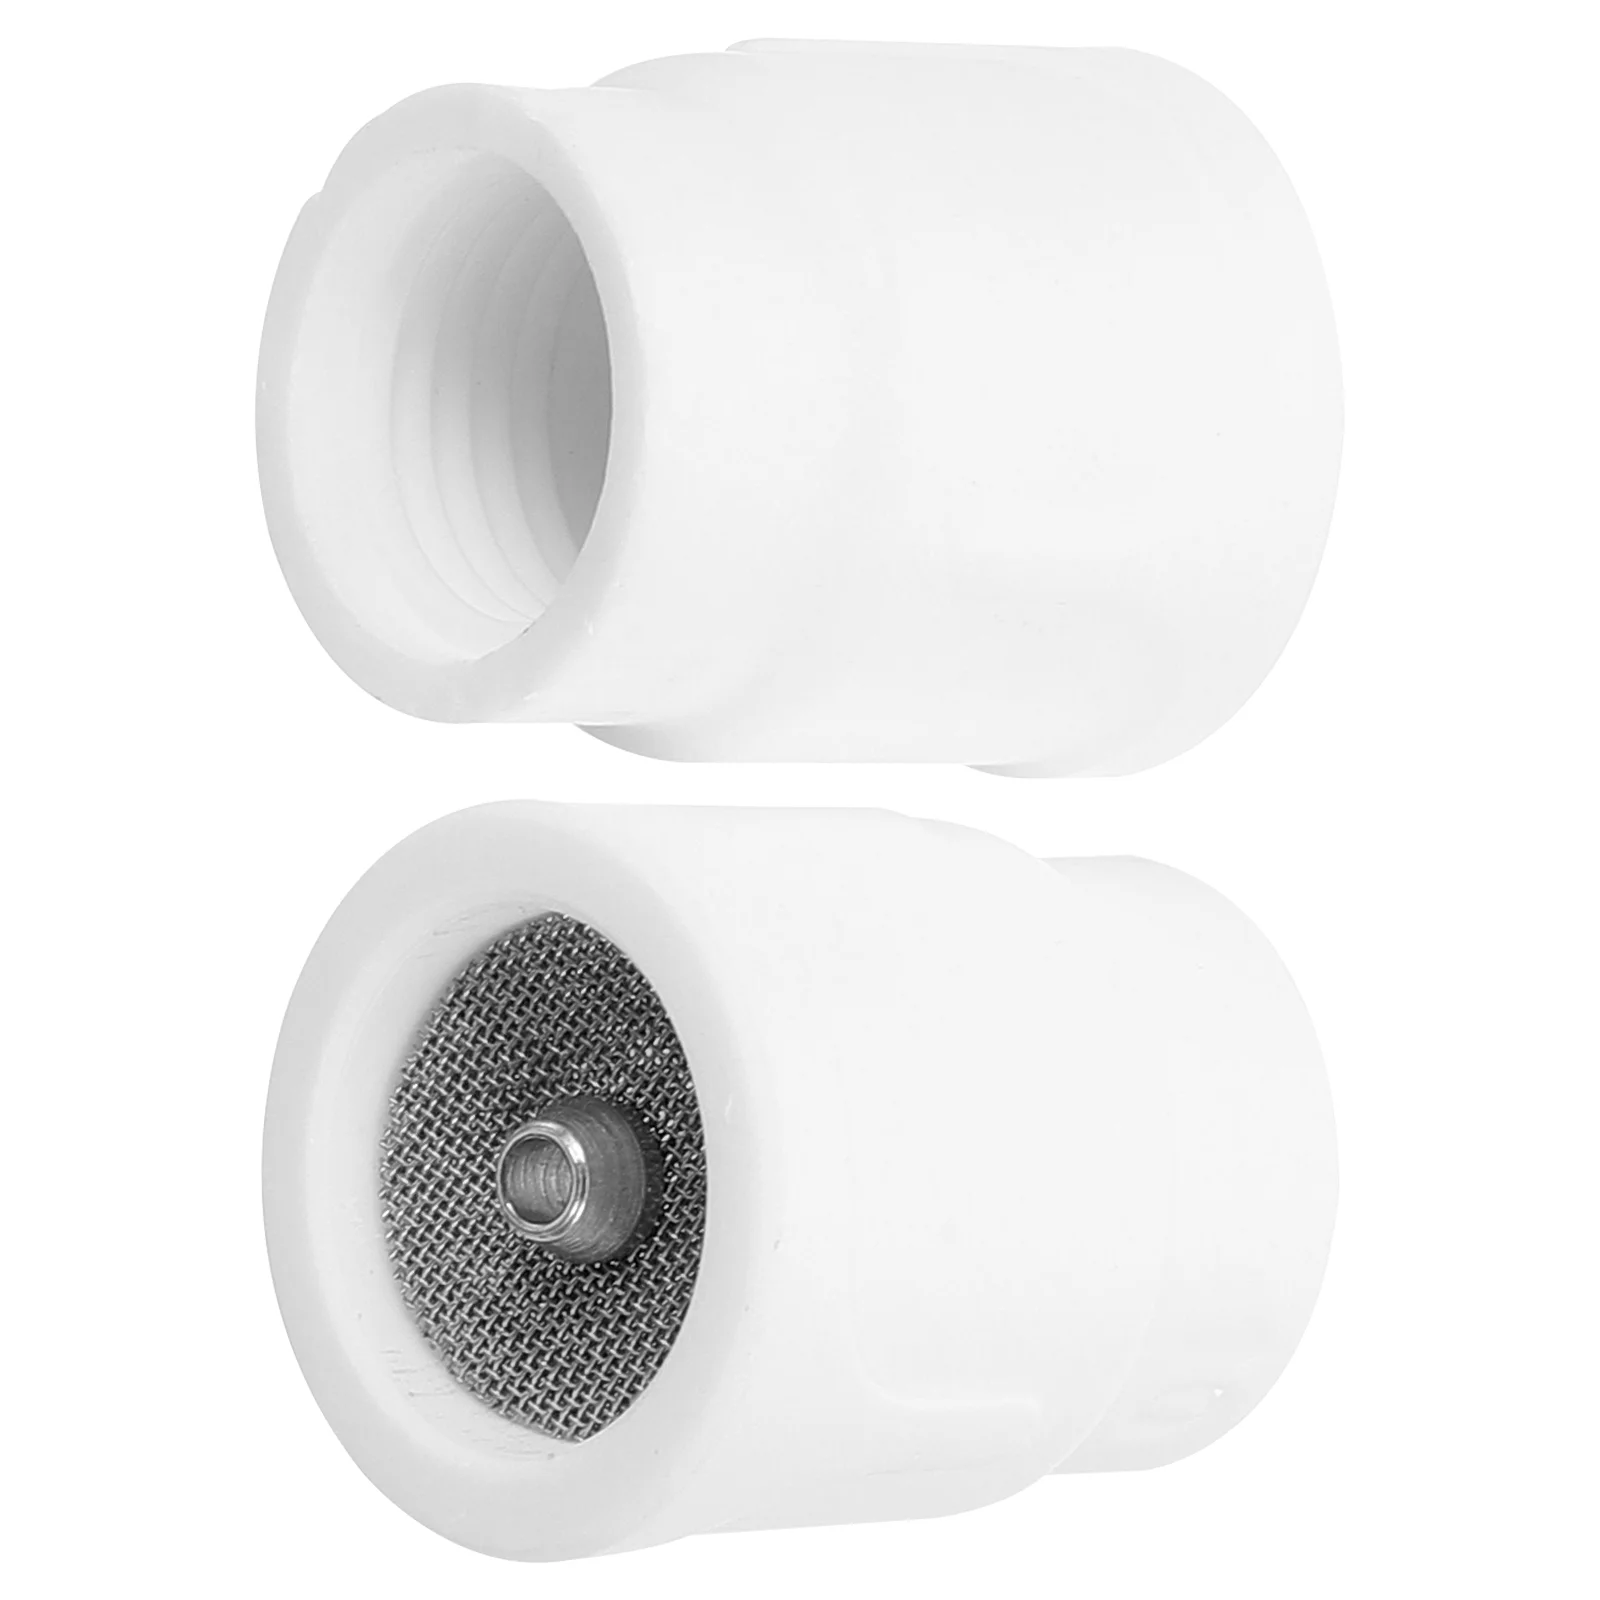 2 Pcs TIG Gas Ceramic Cups Porcelain Mouth Welding Lens for Ceramics Shield Torch